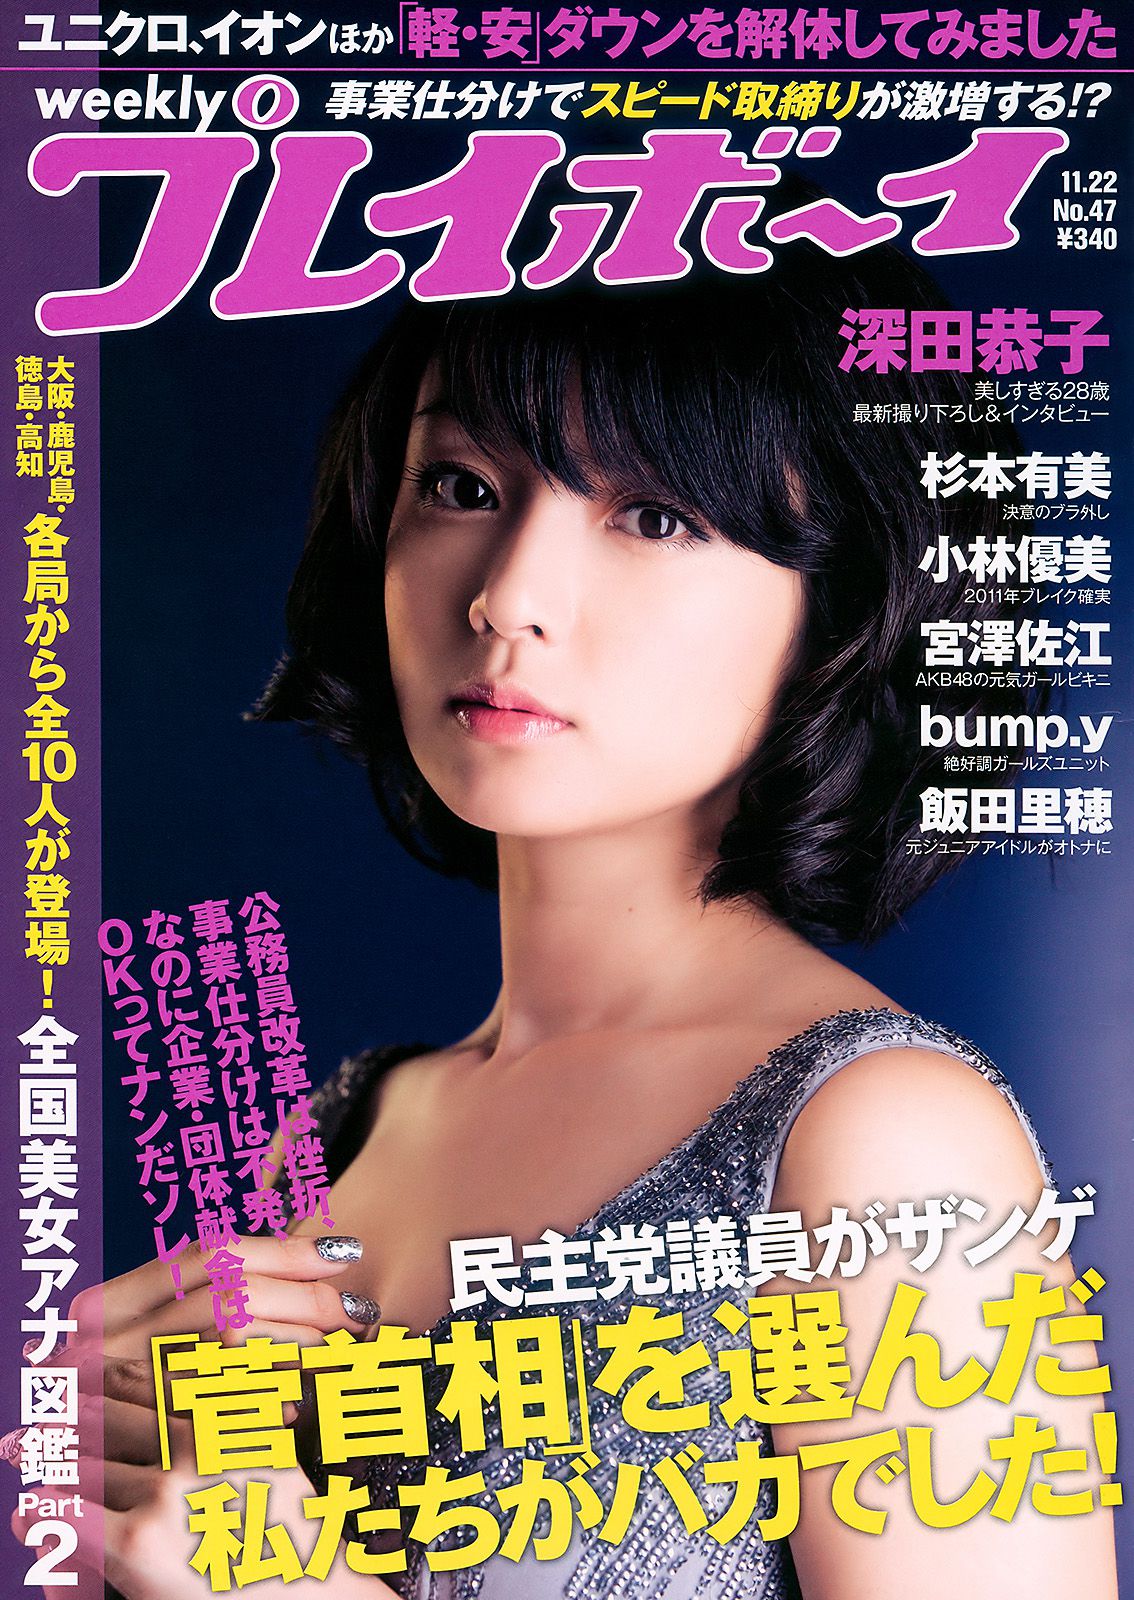 [YS Web] Vol.735 Yumi Sugimoto 杉本有美 写真集 高清大图在线浏览 - 新美图录